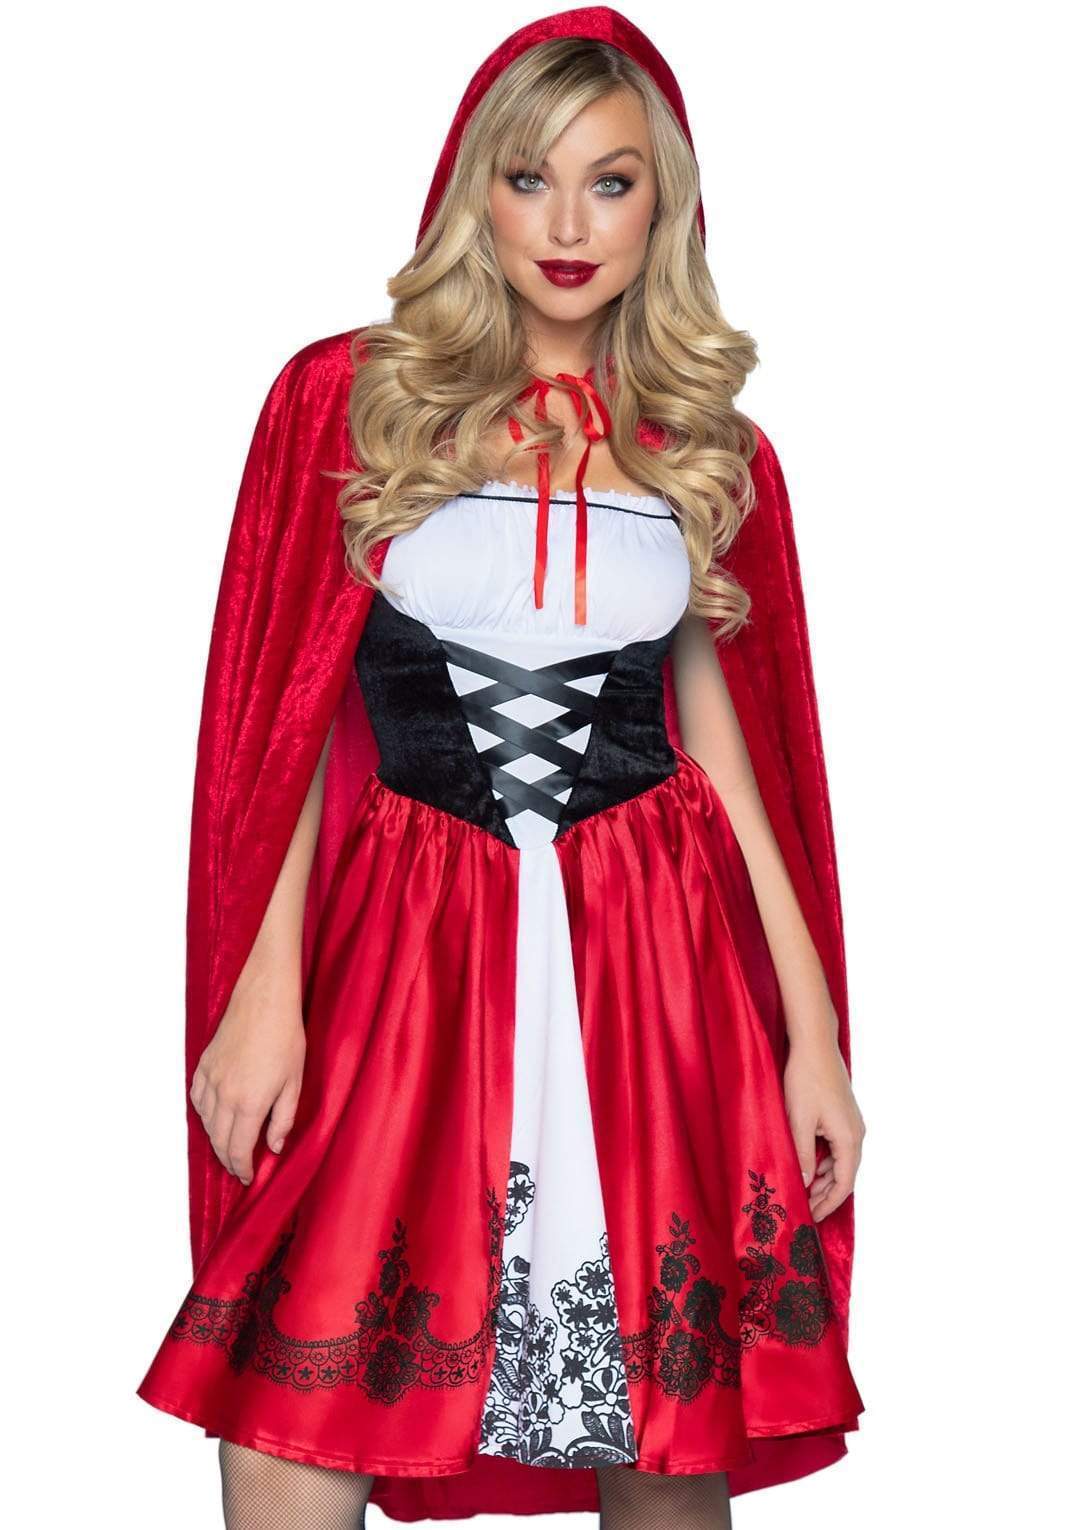 SALE! Plus Size Little Red Riding Hood Halloween Costume Lg XL 1x